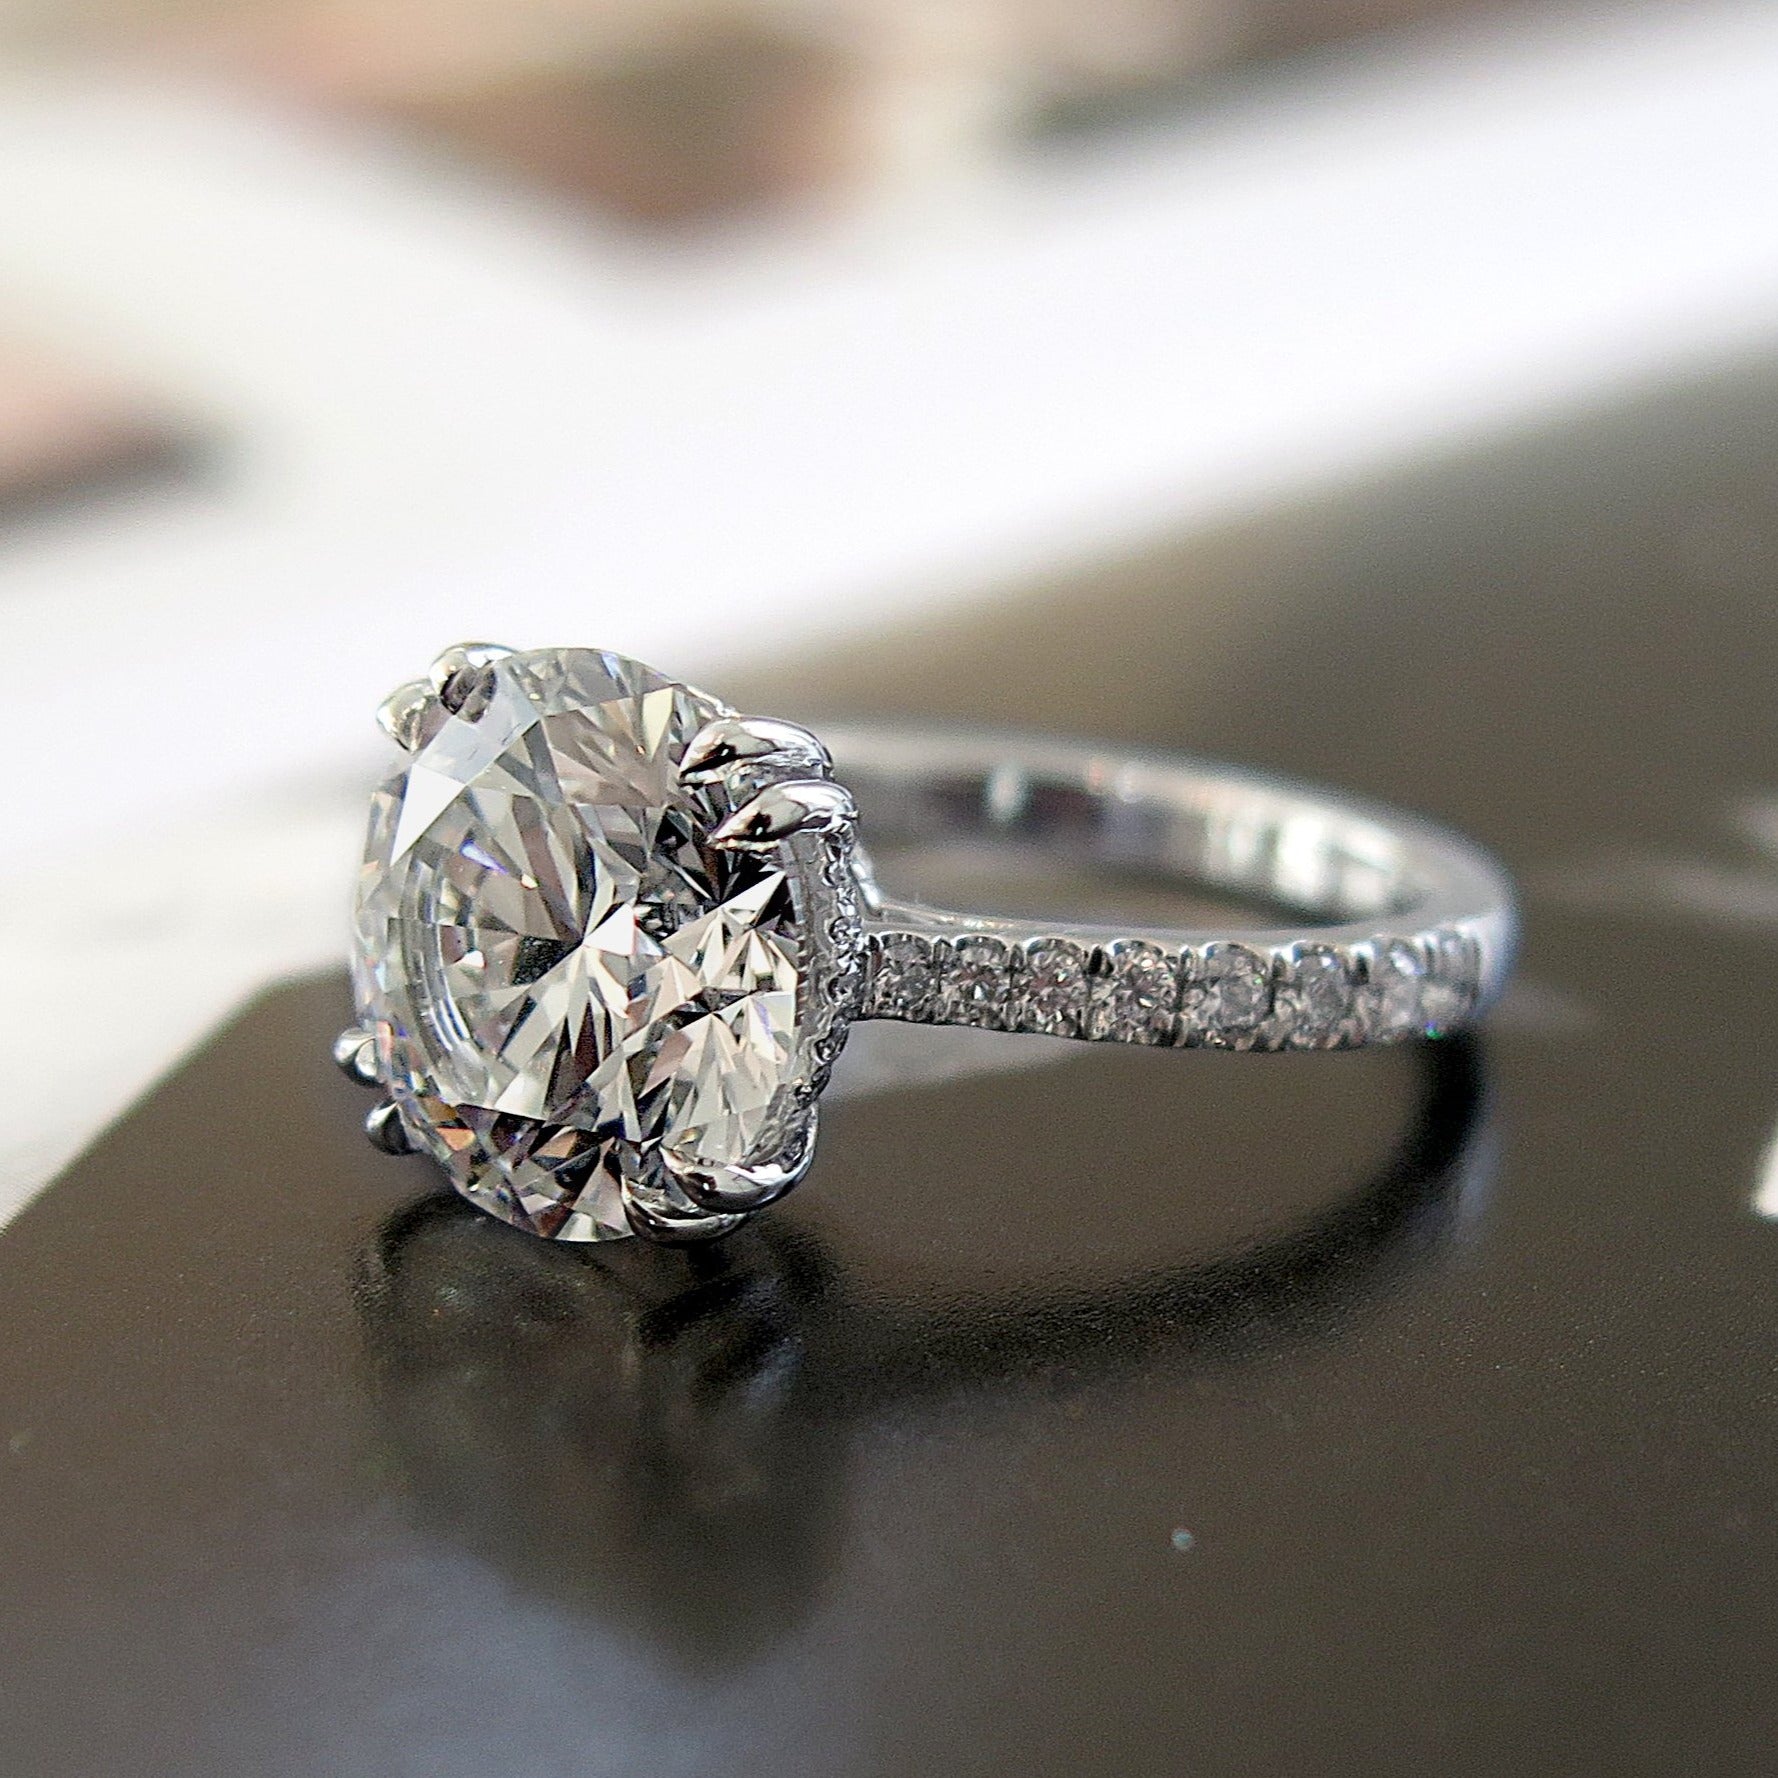 BIG Henri Daussi Oval Diamond Halo Engagement Ring - 5.23 ctw